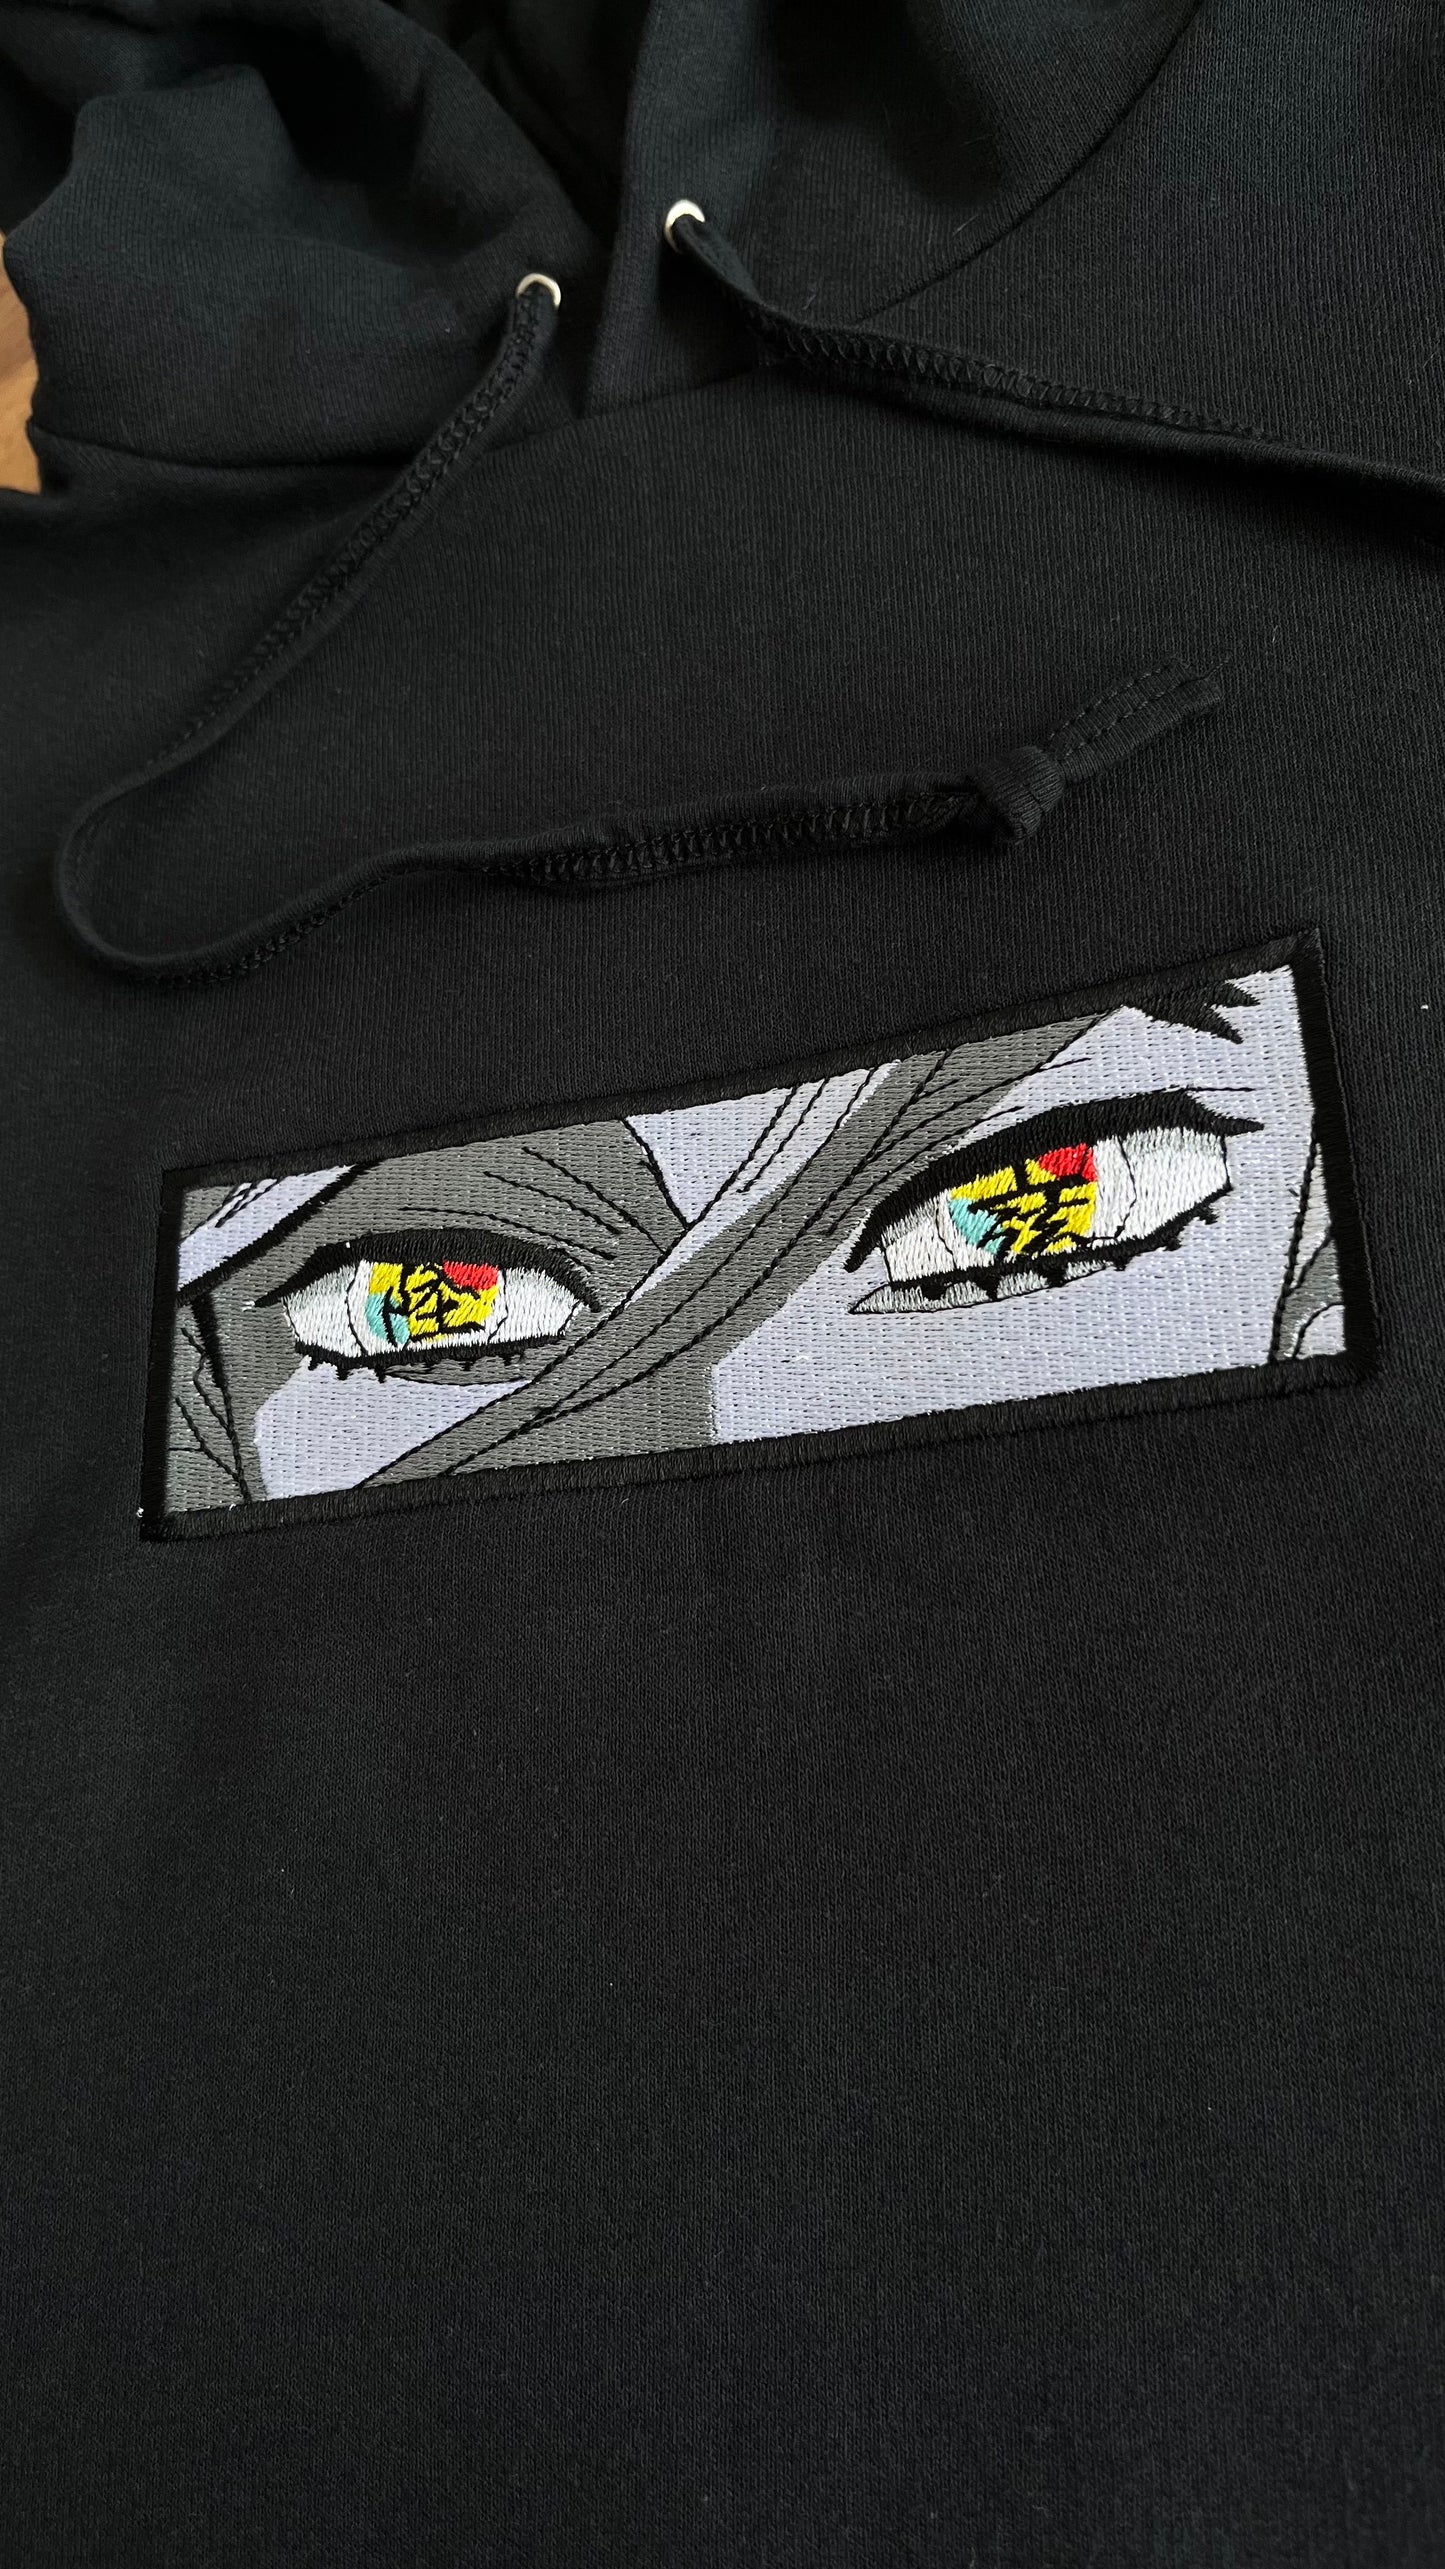 Douma Eyes Embroidery (Demon Slayer)